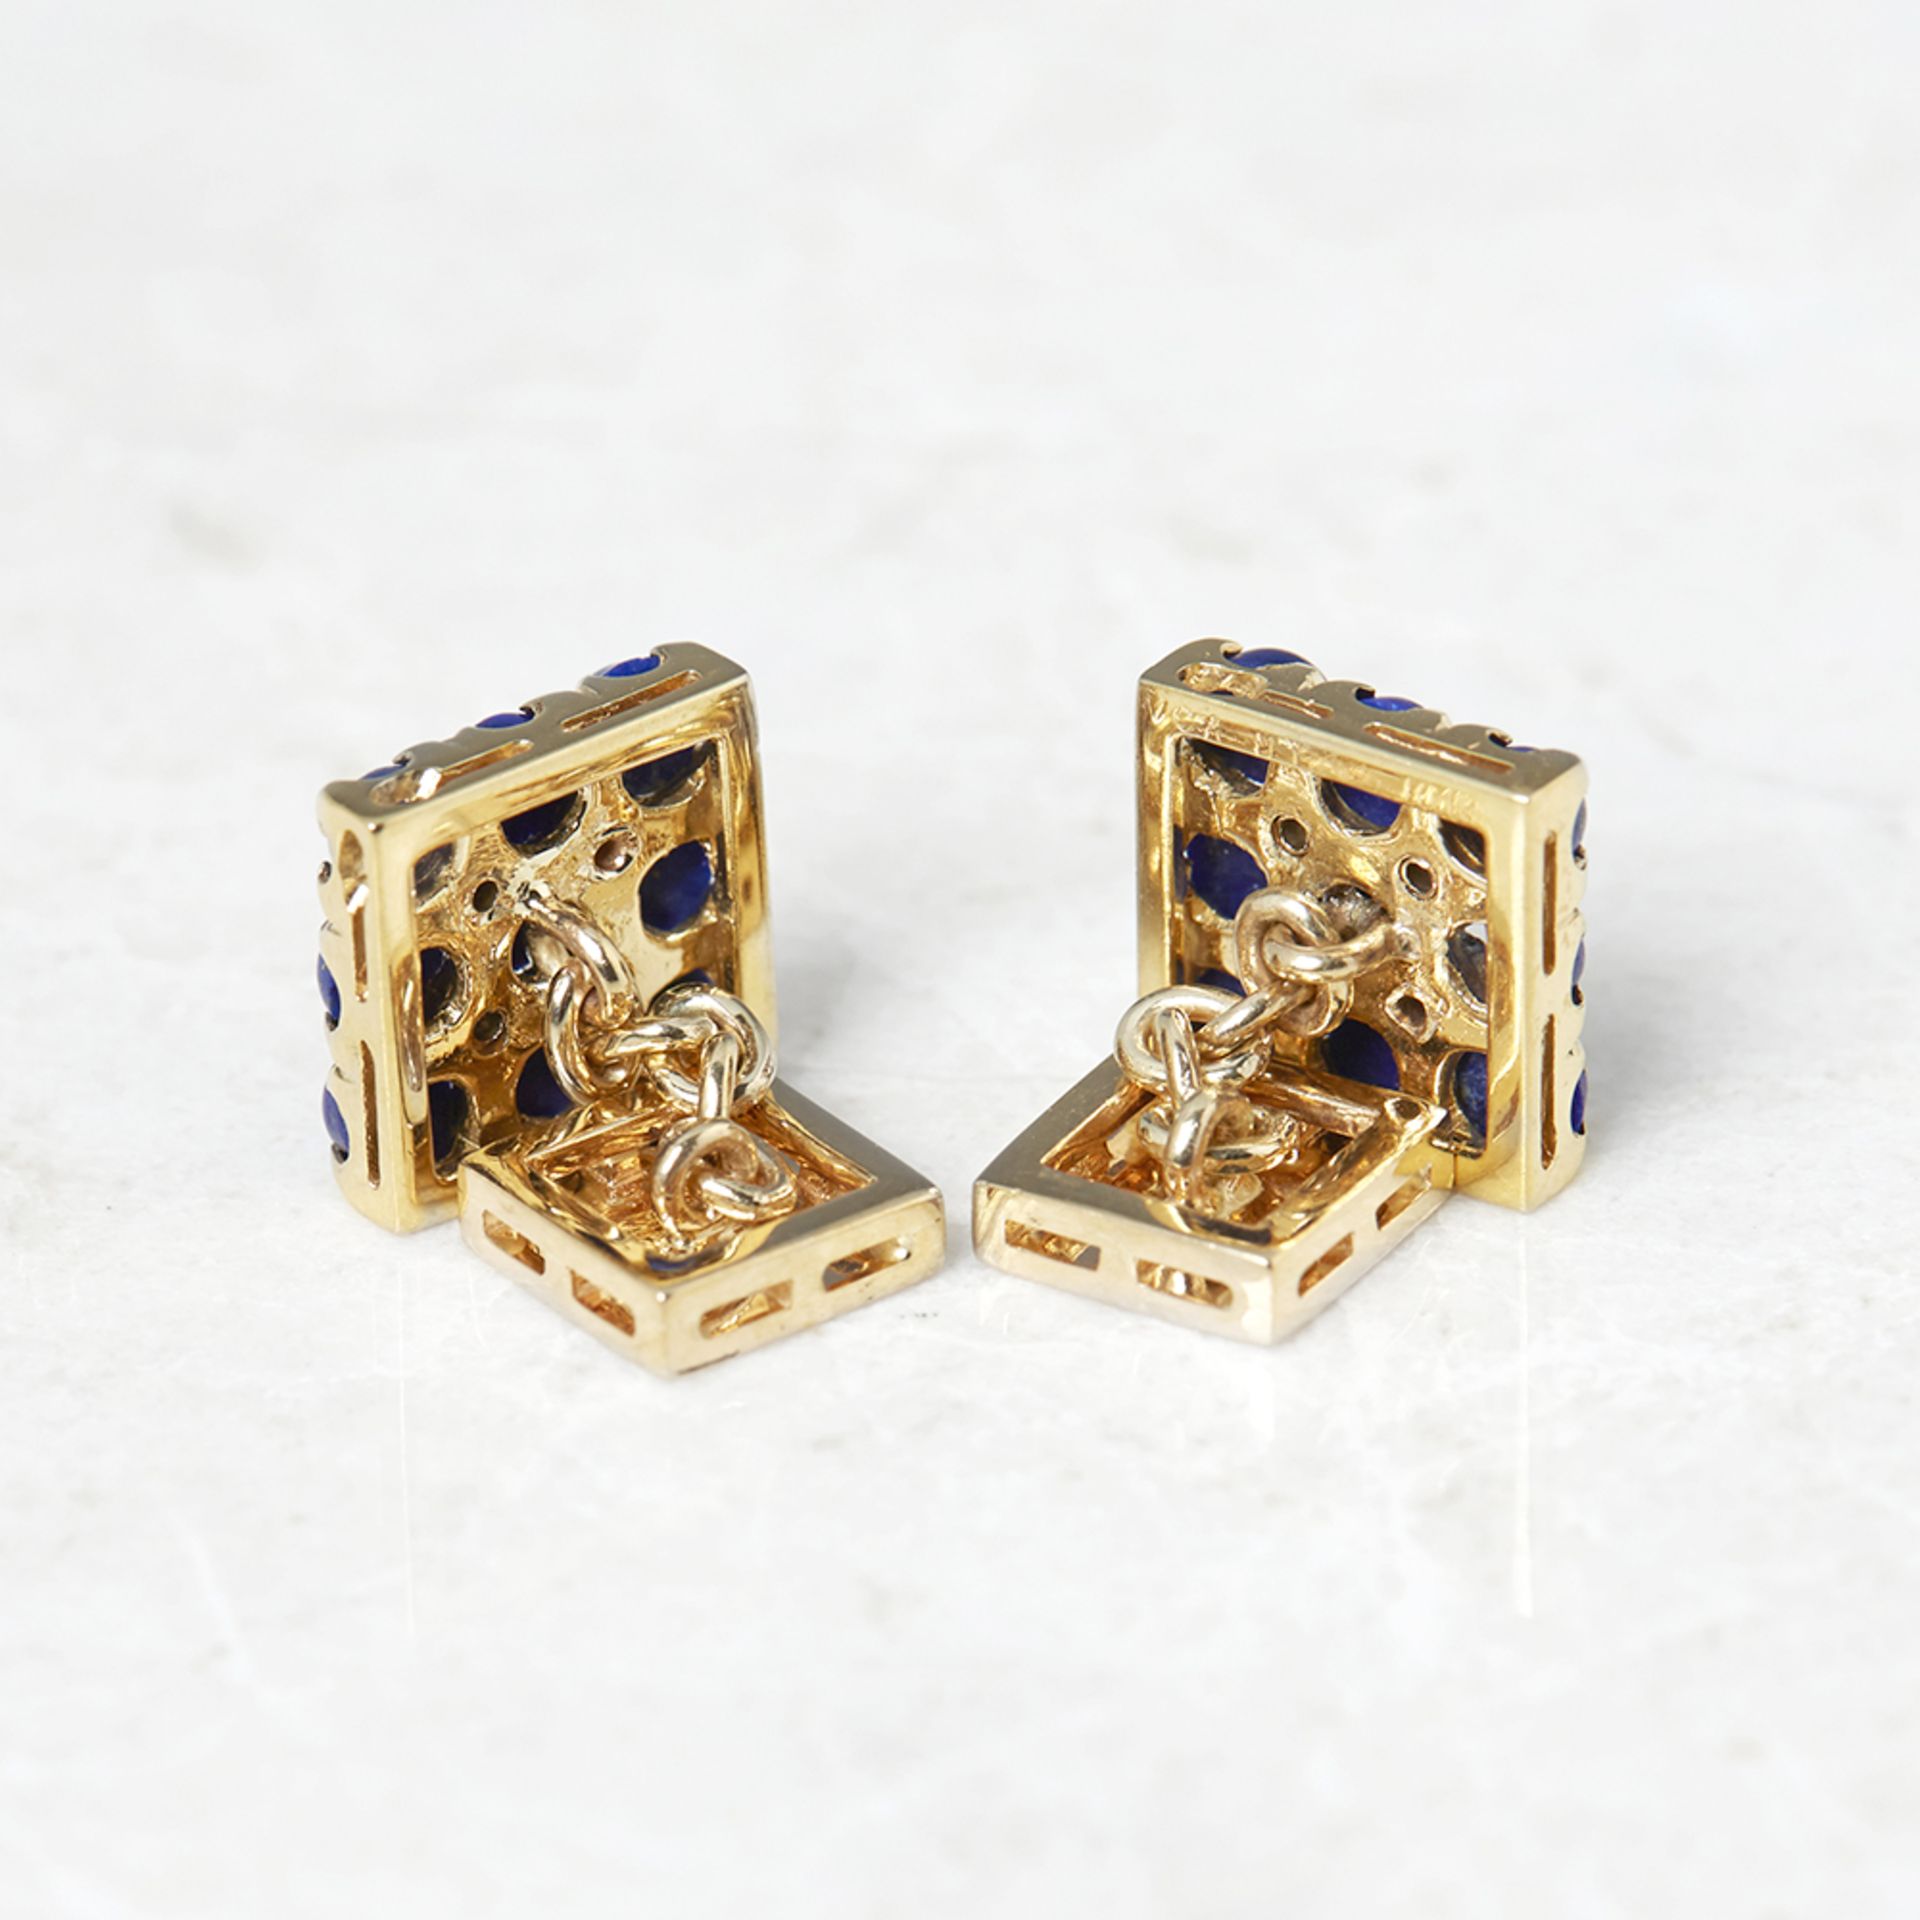 Van Cleef & Arpels 18k Yellow Gold Lapis Lazuli & 0.20ct Diamond Cufflinks - Image 2 of 5